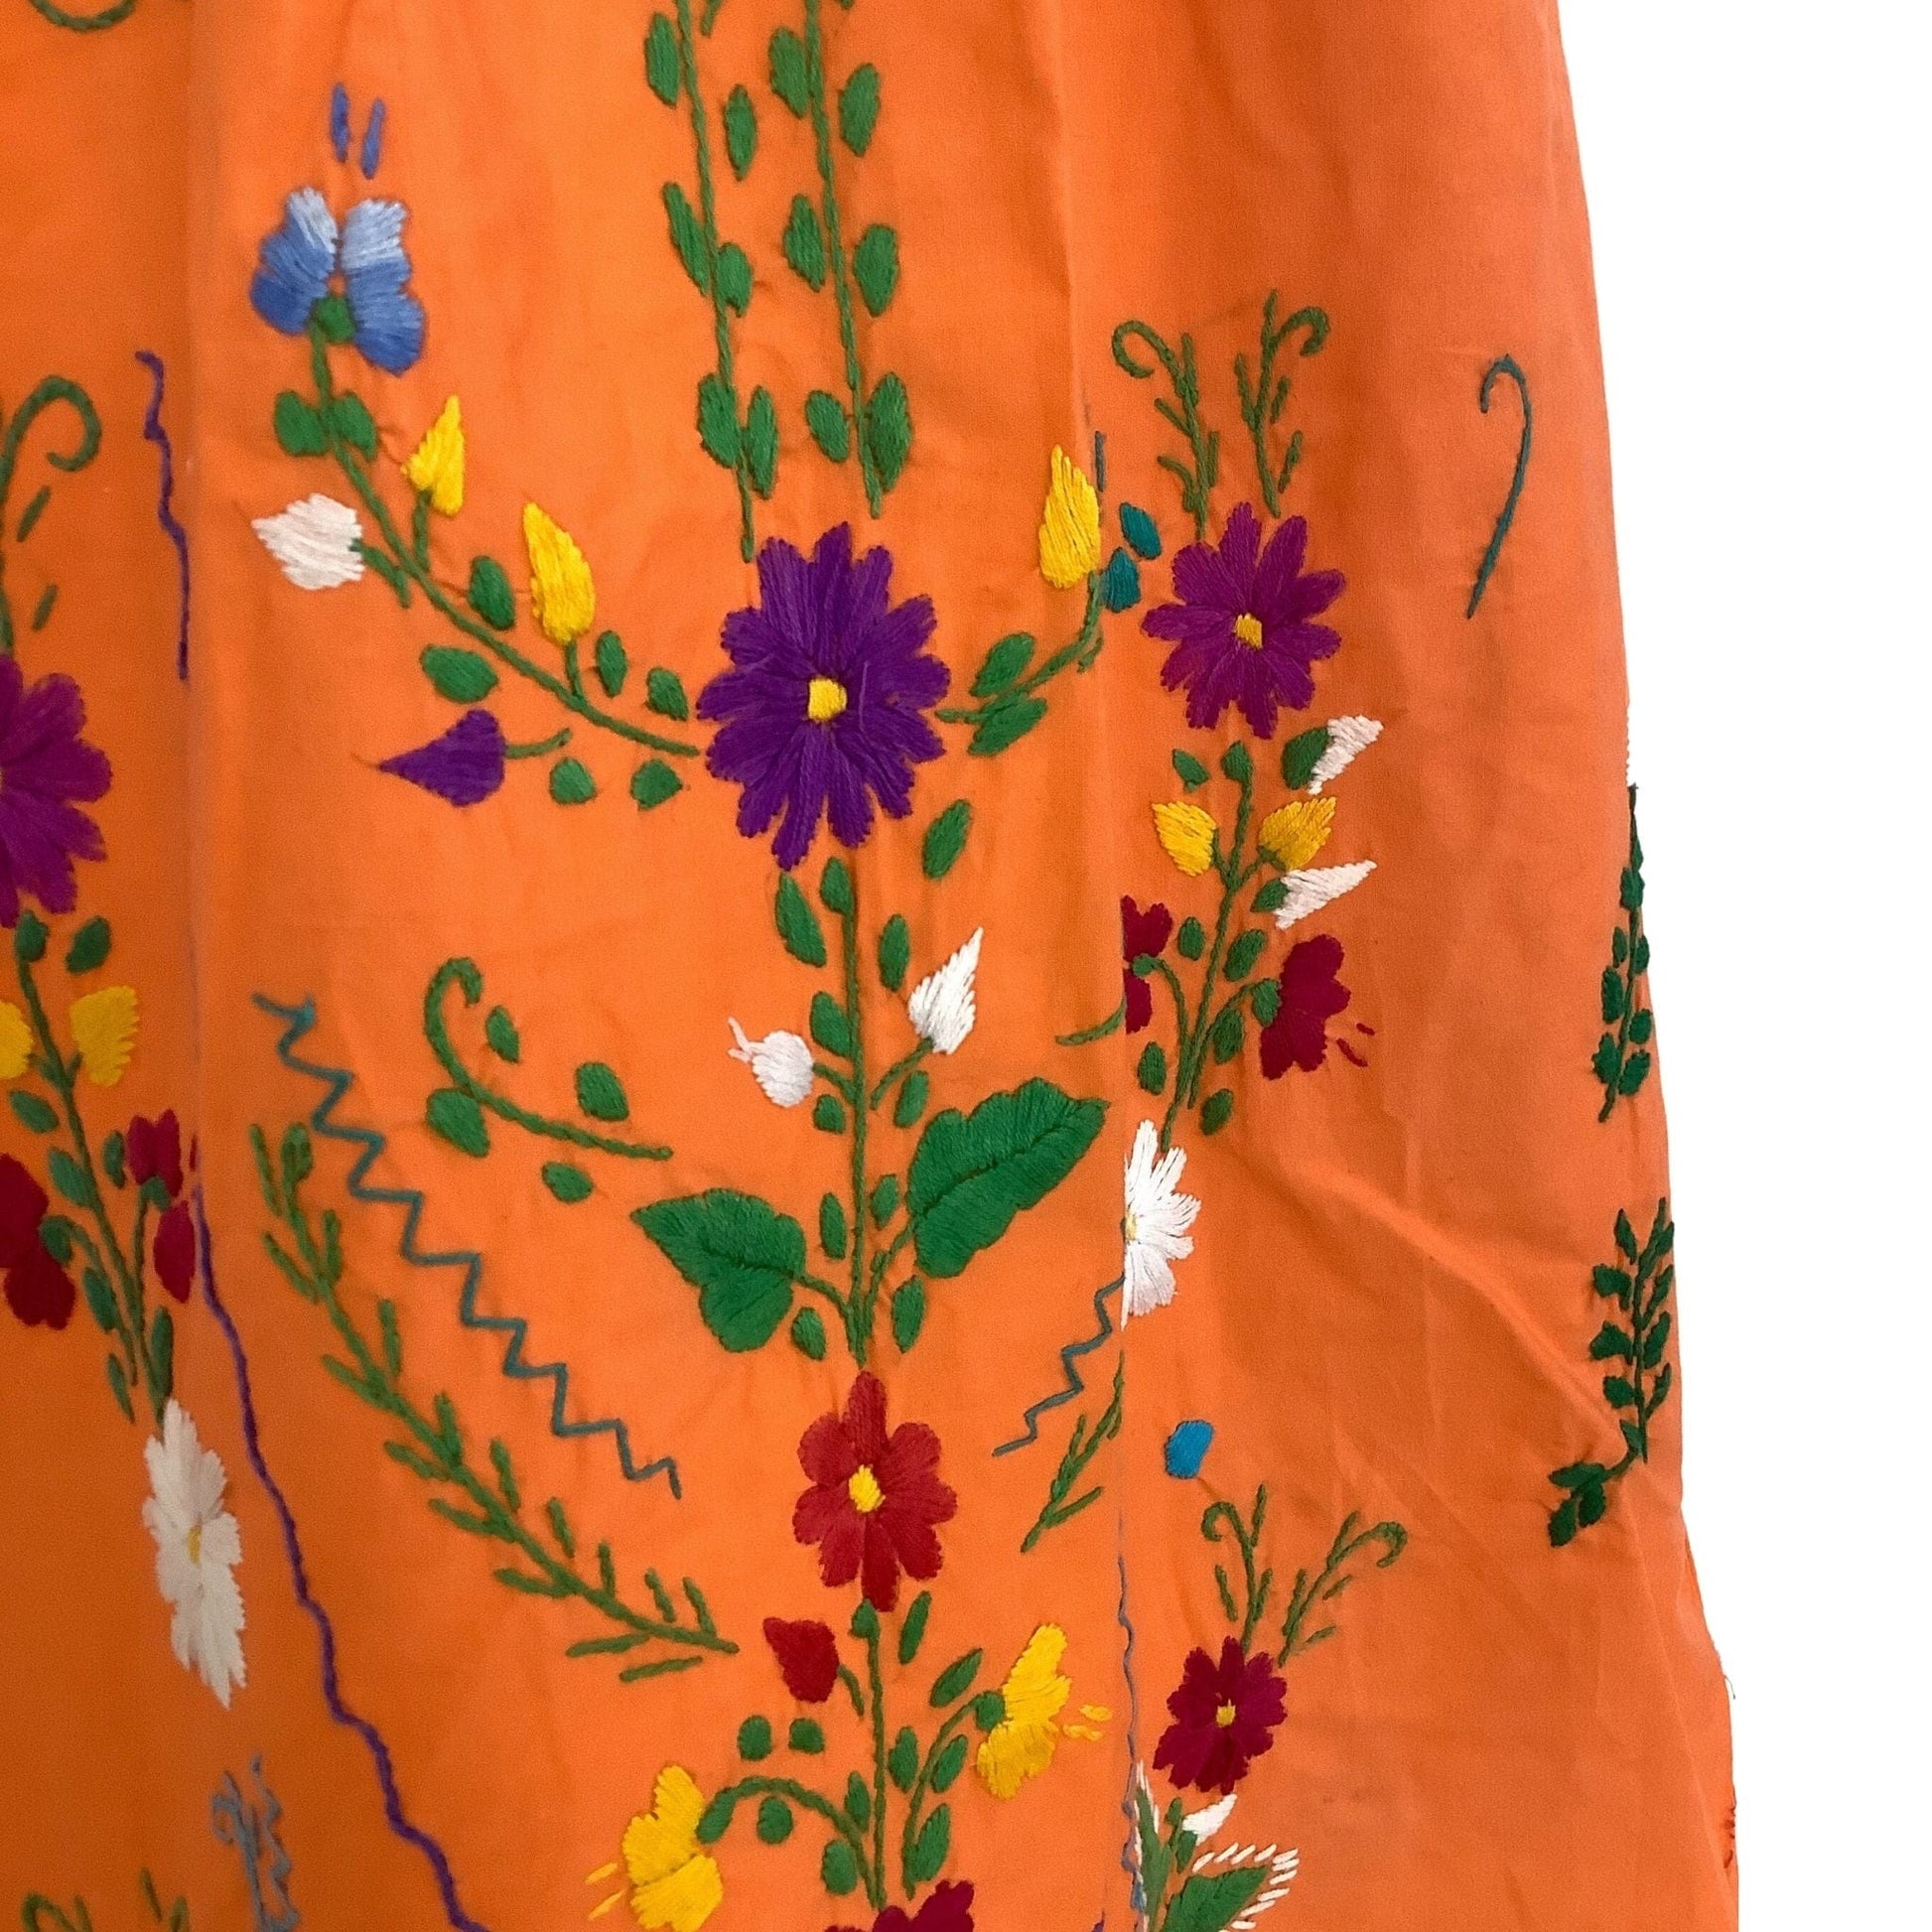 Embroidered Peasant Dress Small / Orange / Vintage 1970s